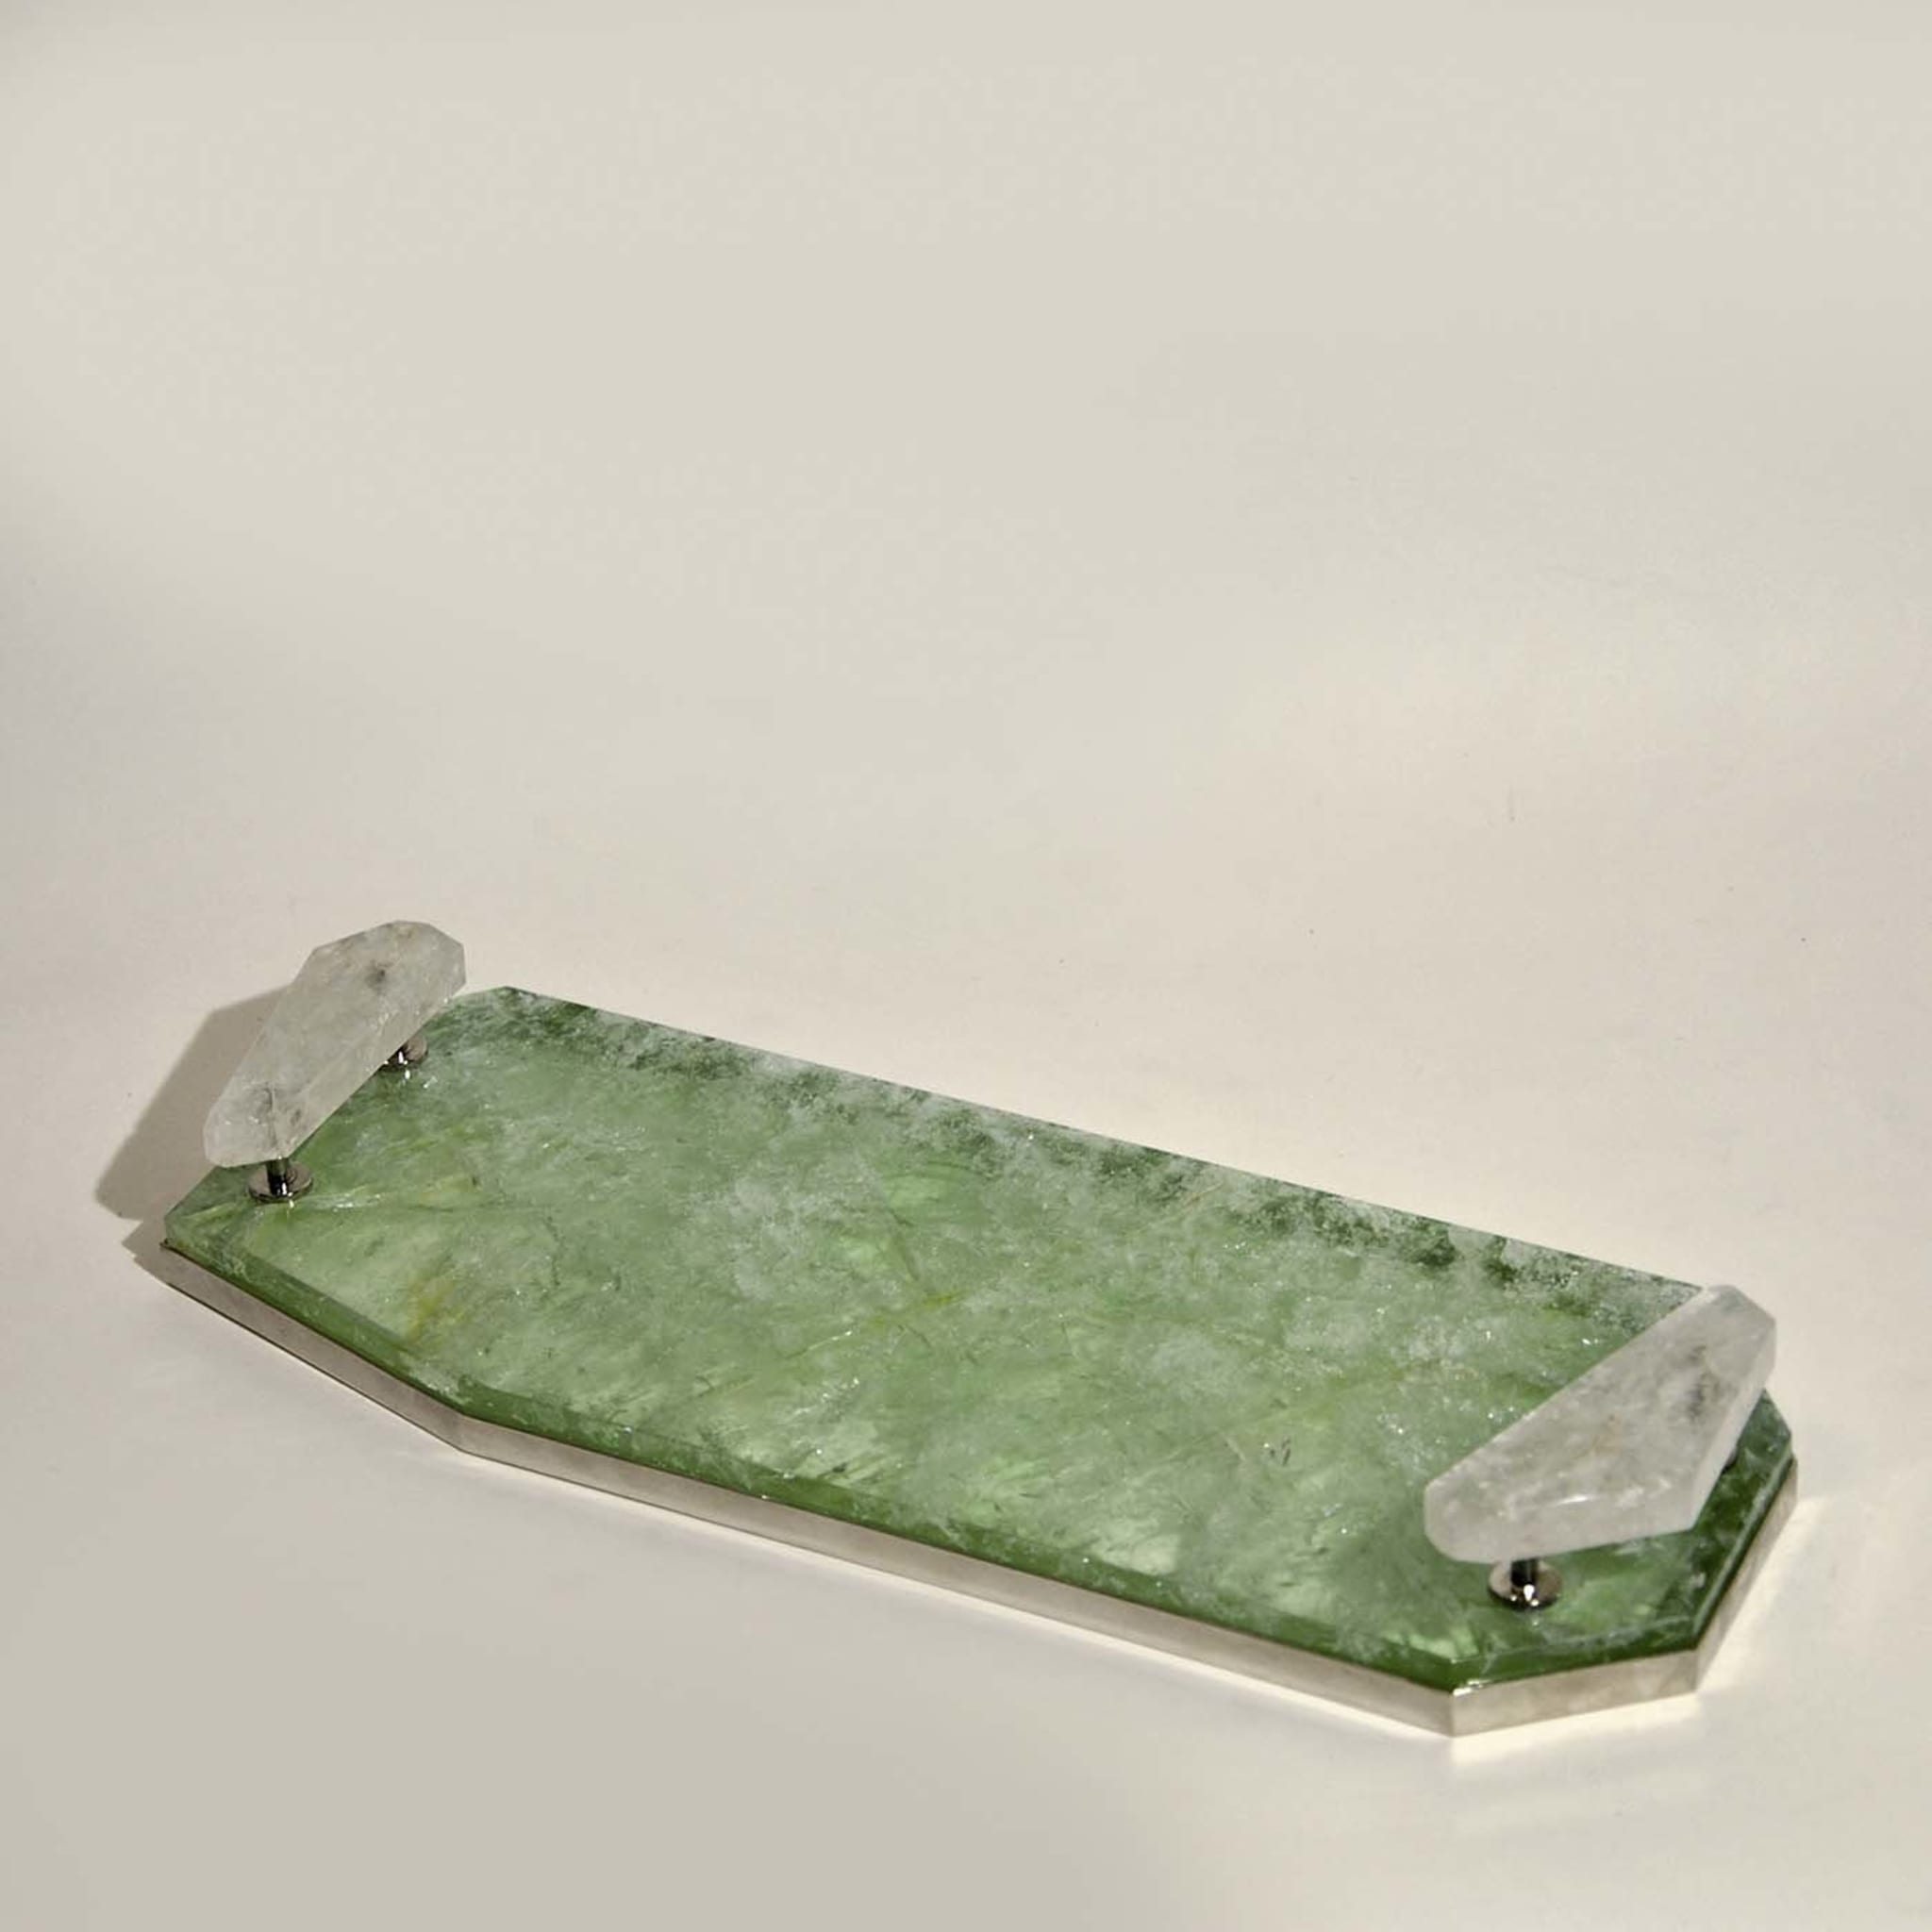 Brass Tray in Green and Hyaline Quartz - Alternative view 2